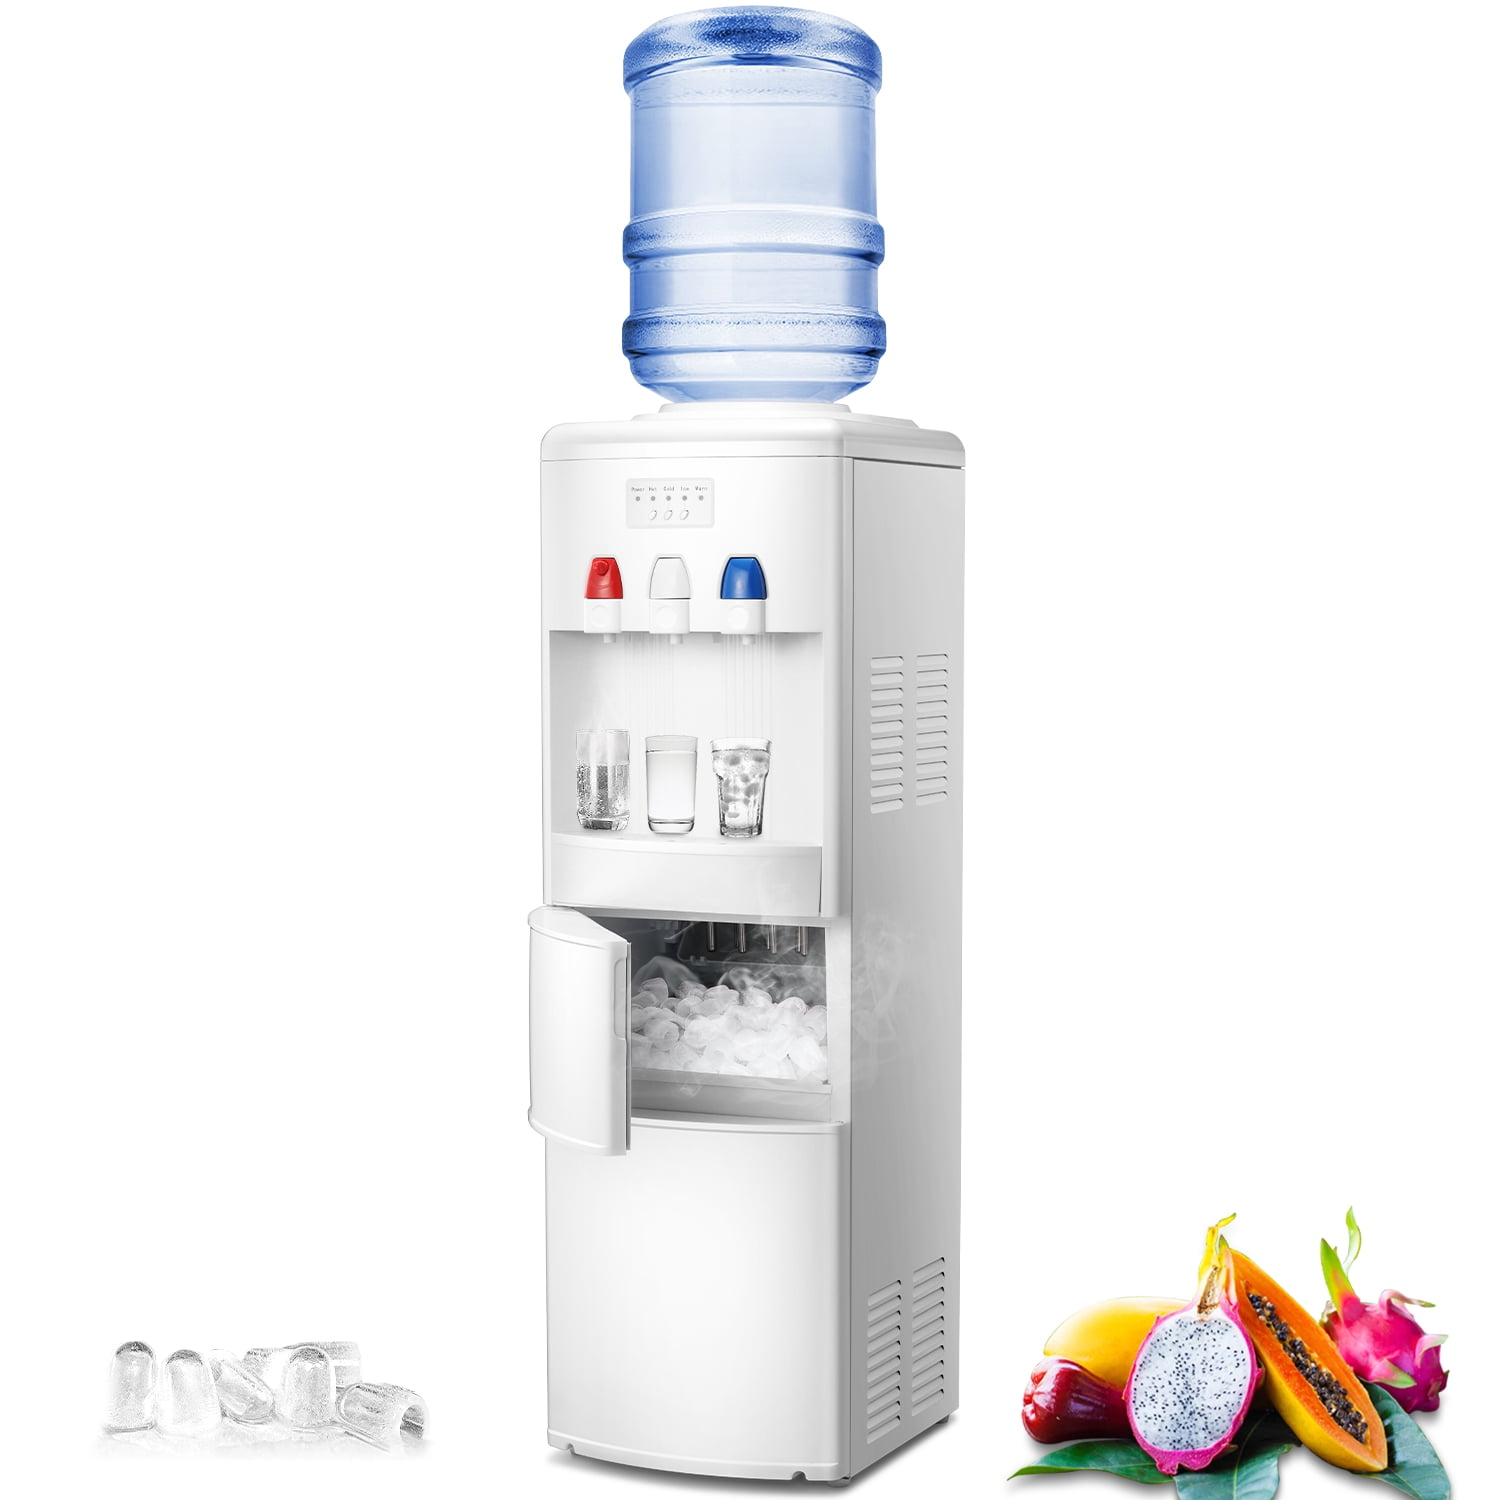 UKISHIRO 3 in 1 Countertop Water Cooler Dispenser with Ice Maker